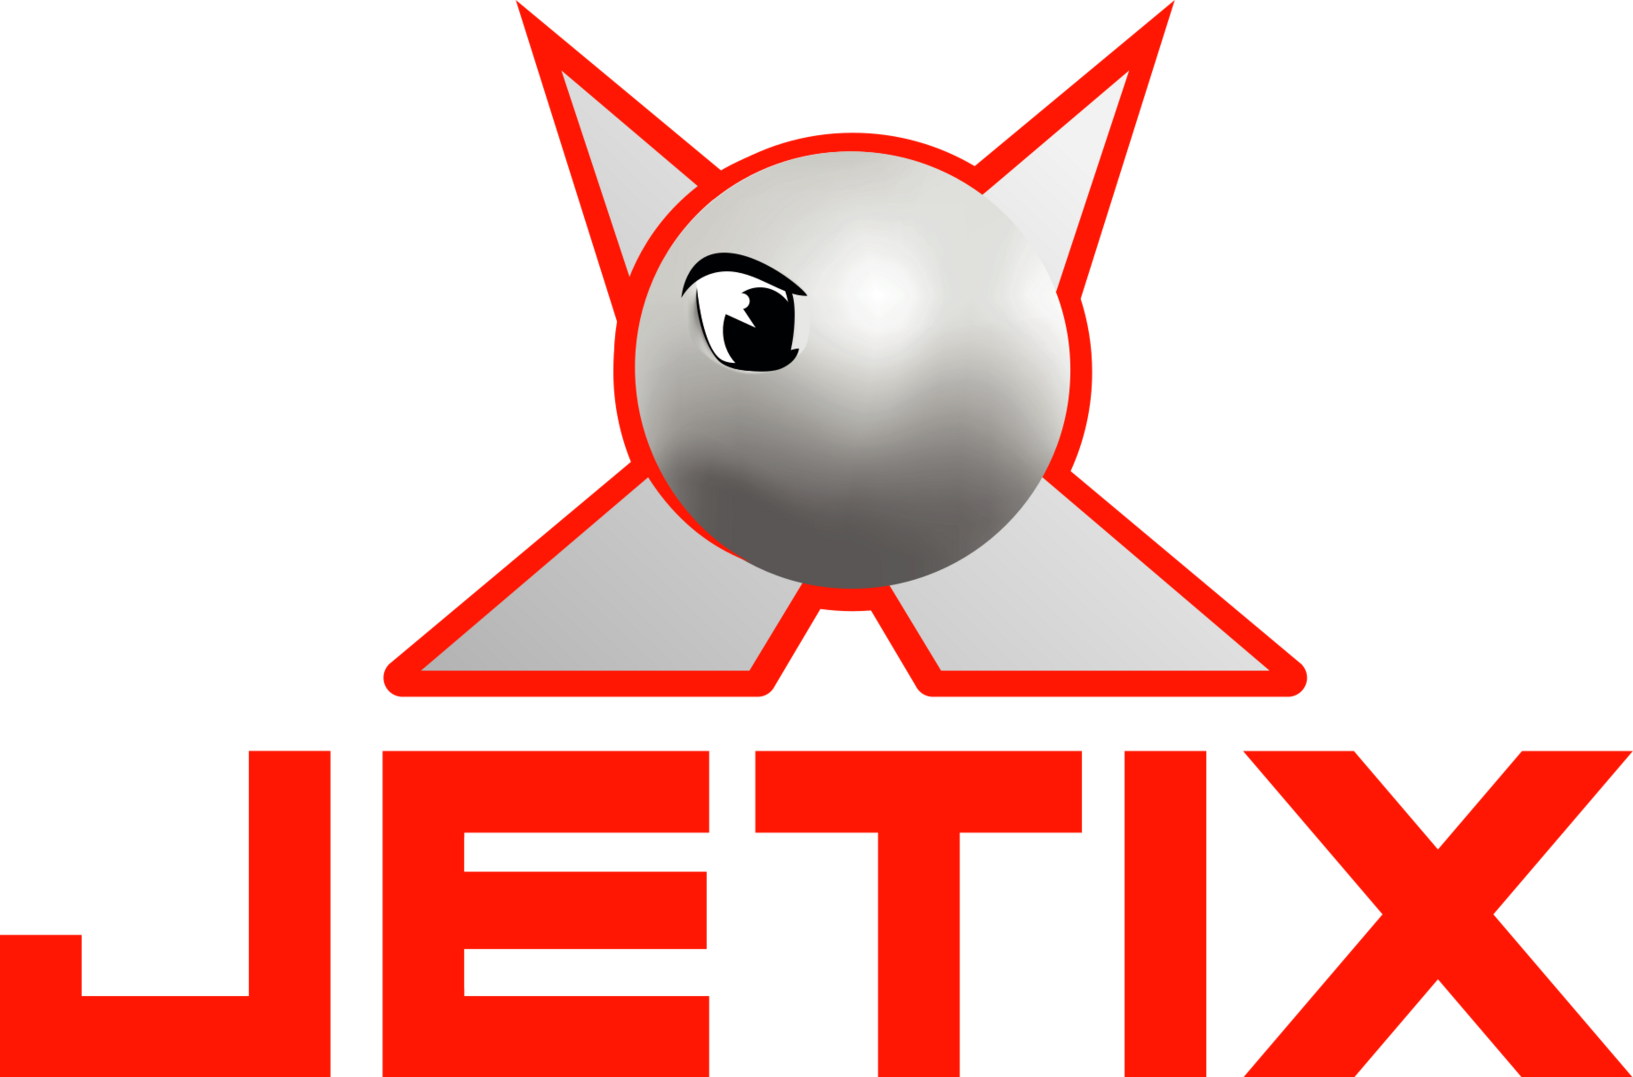 Jetix by NearRyuzaki90 on DeviantArt